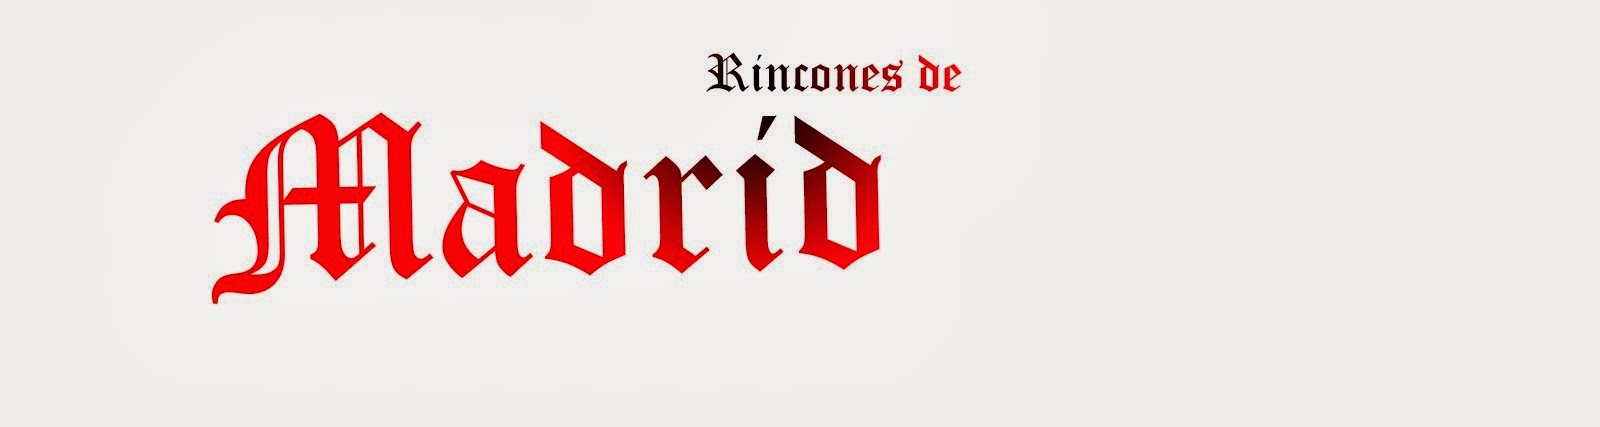 Rincones de Madrid